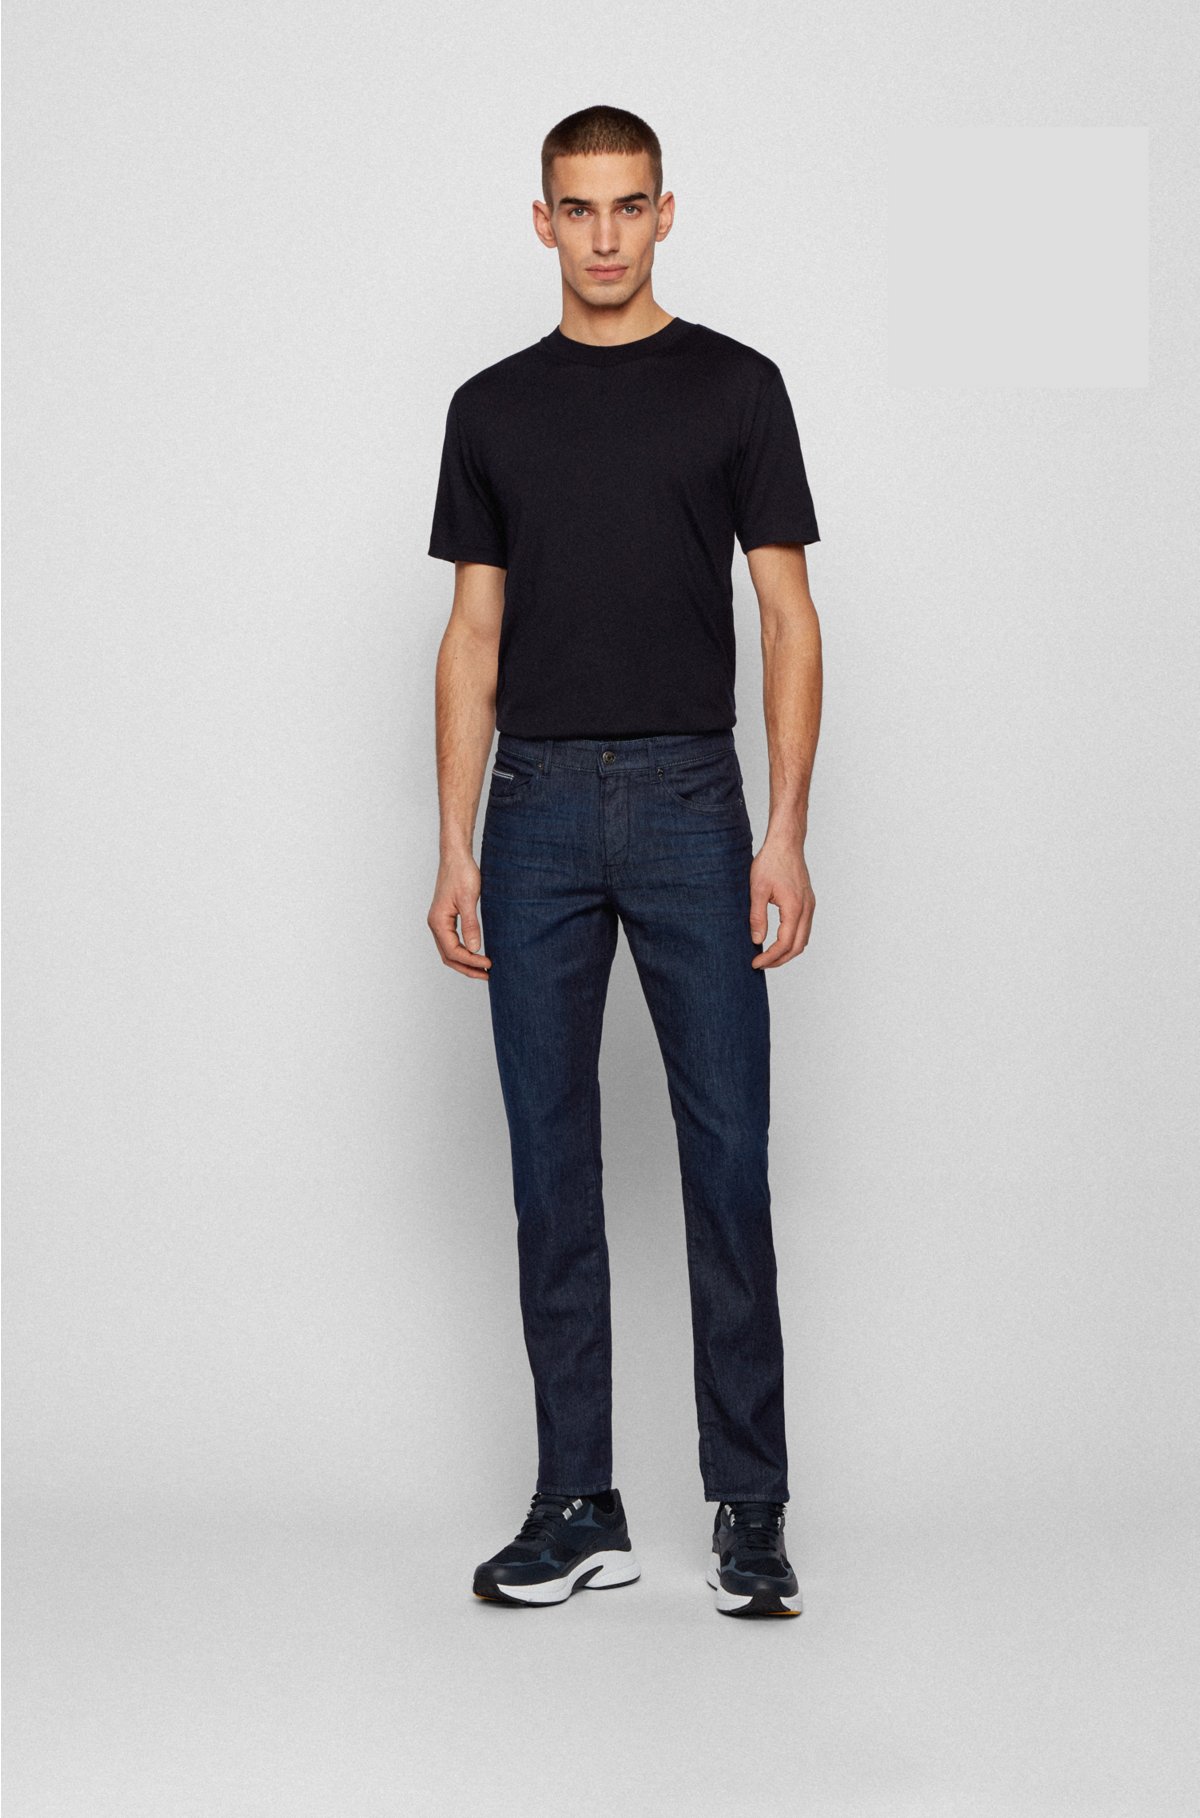 BOSS - Slim-fit jeans in lightweight dark-blue stretch denim